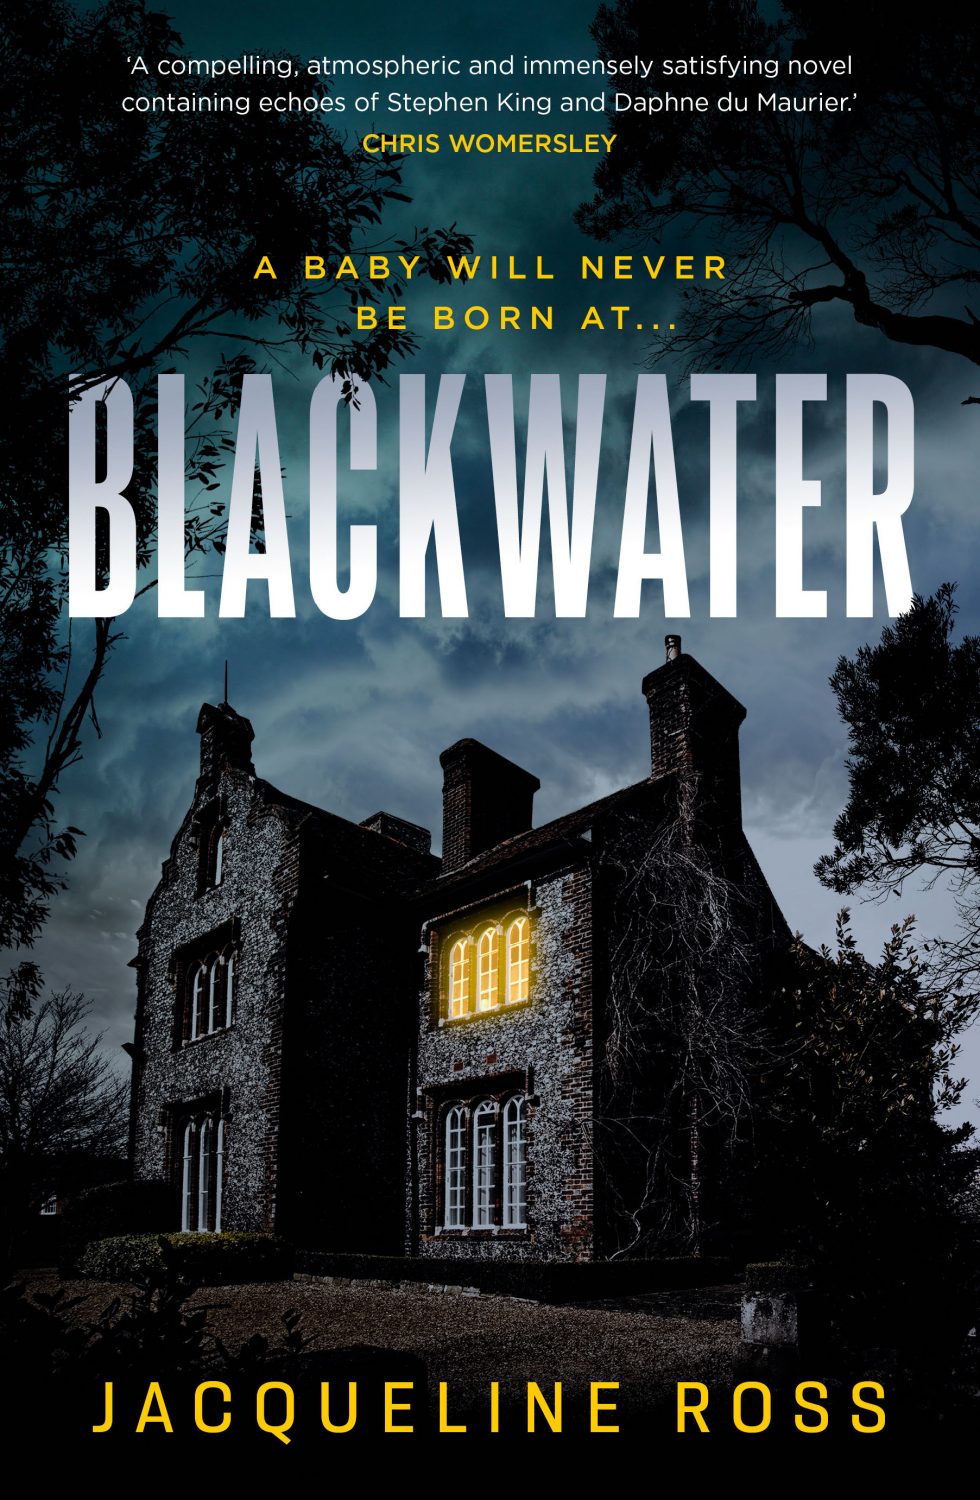 Blackwater: Novel Review